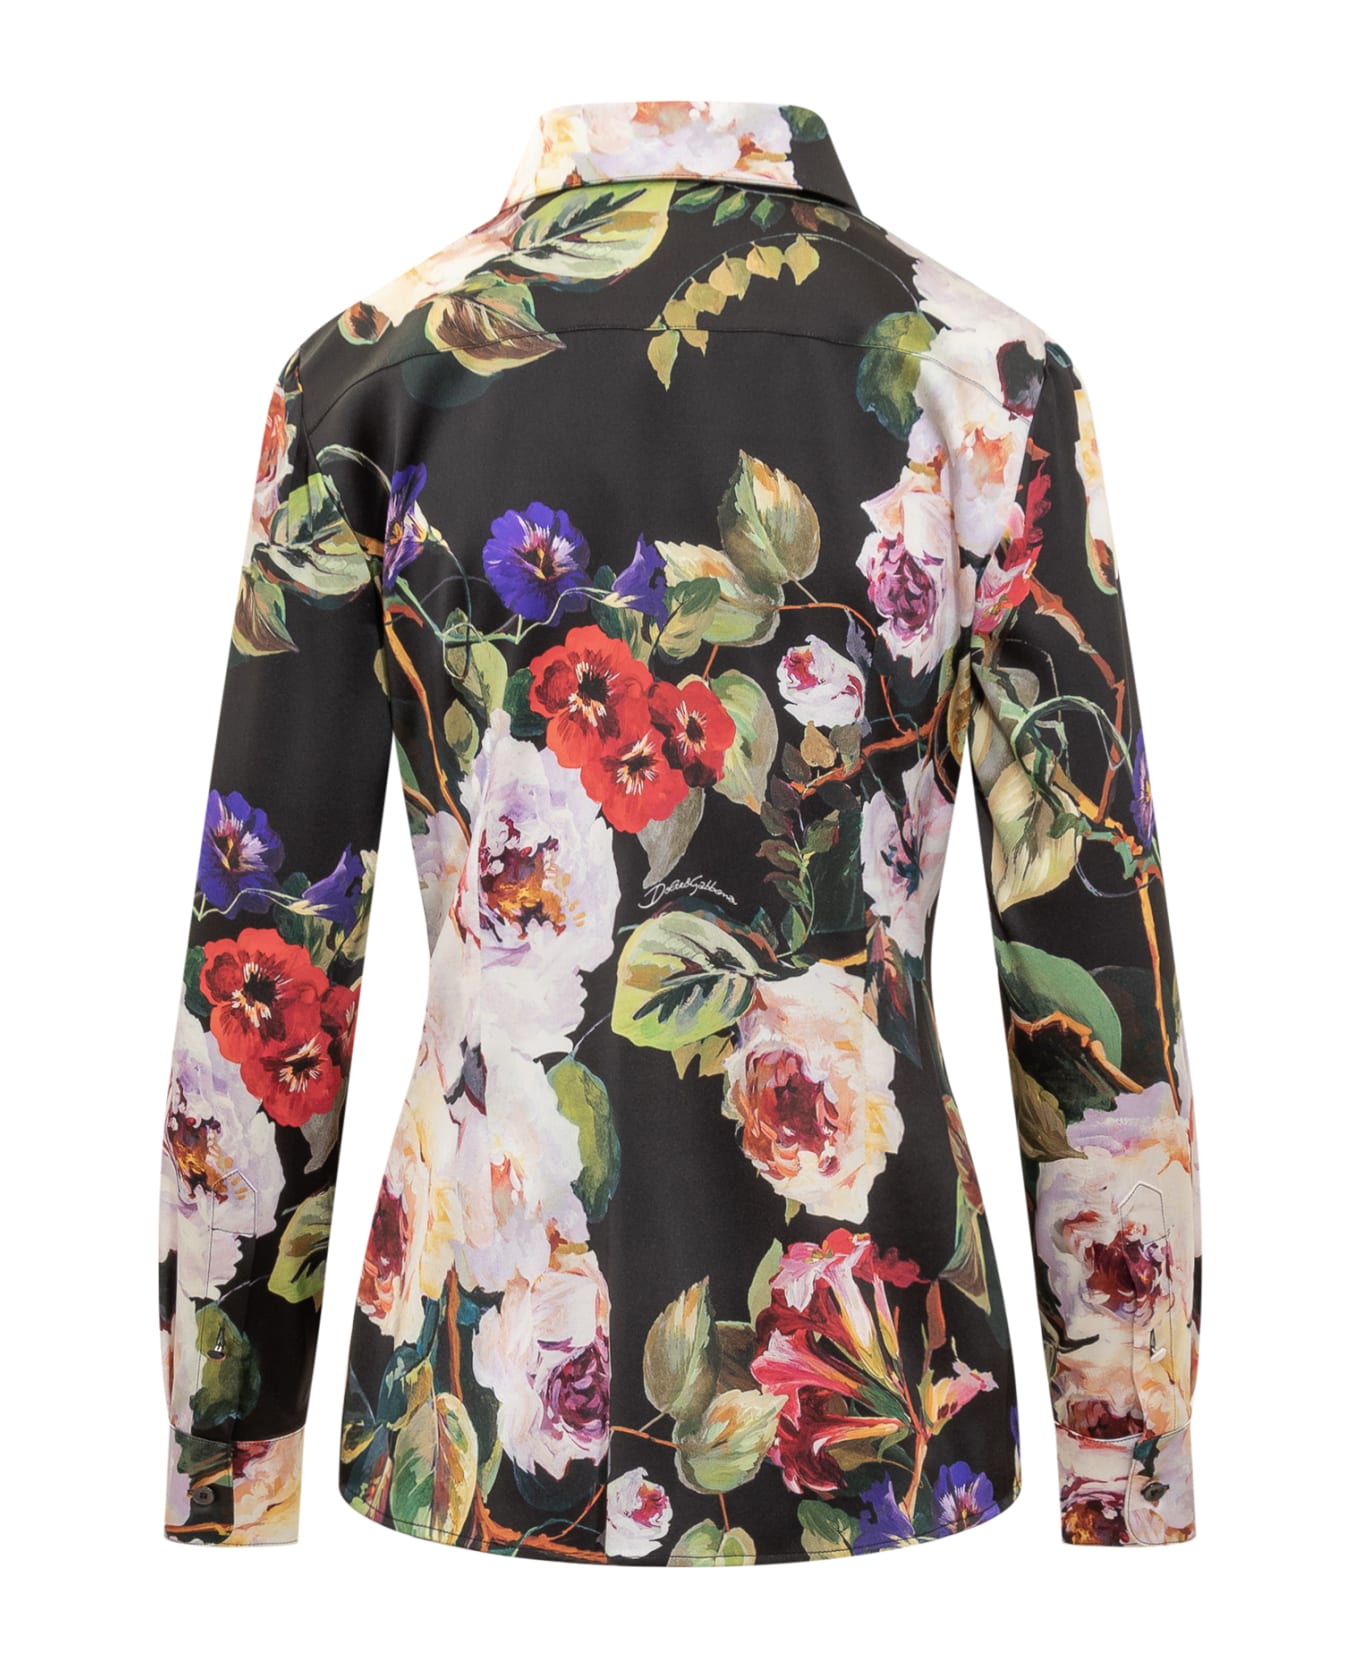 Dolce & Gabbana Rose Garden Print Shirt - ROSETO FDO NERO シャツ